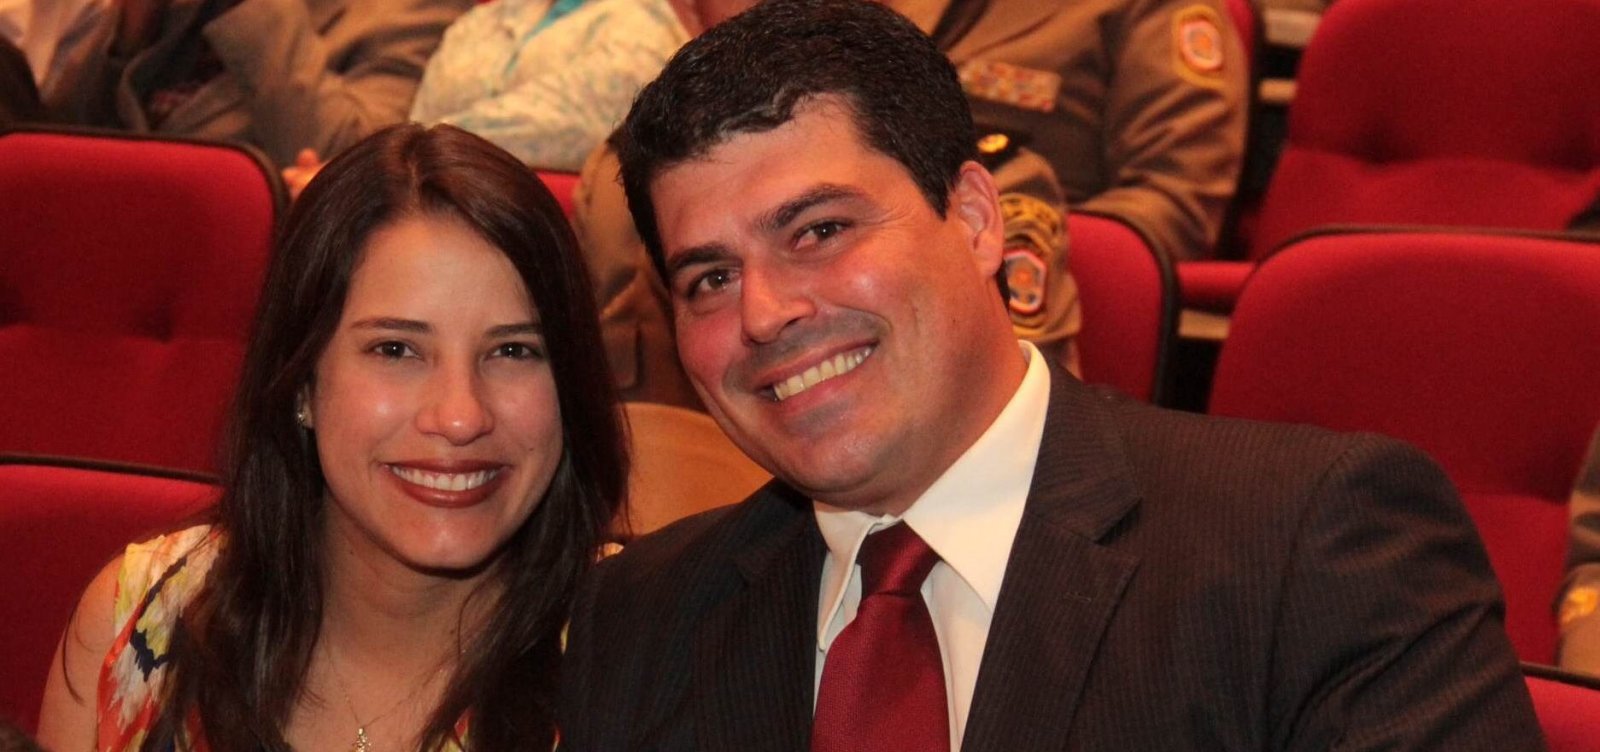 Marido de candidata a governo de Pernambuco morre de infarto fulminante neste domingo